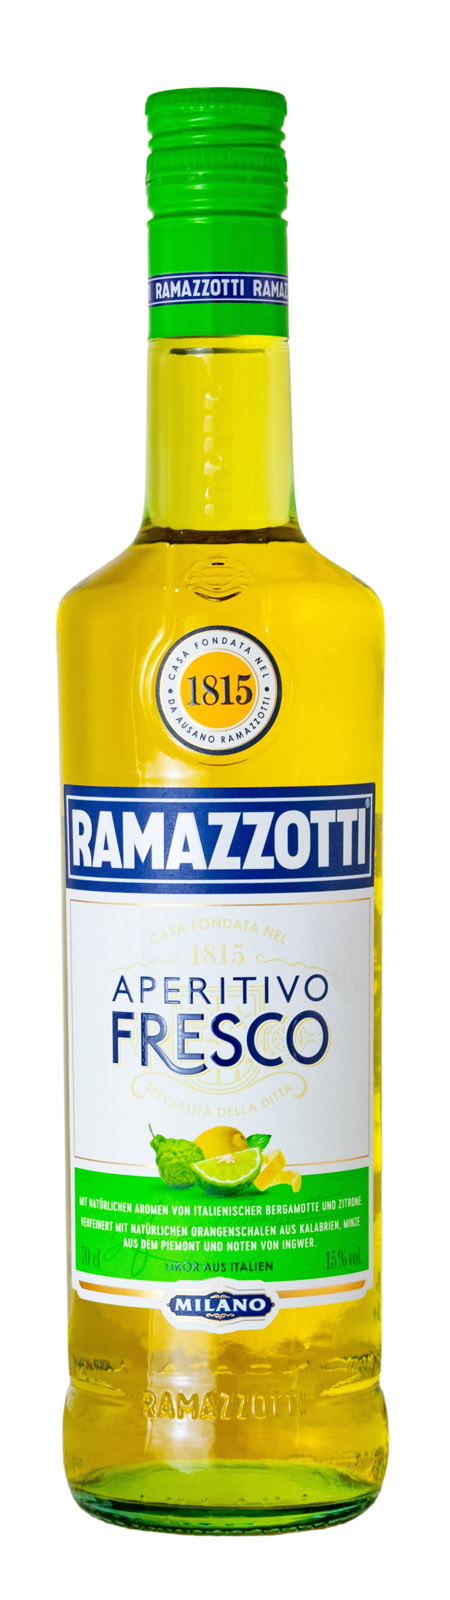 Ramazzotti kaufen günstig Aperitivo Fresco